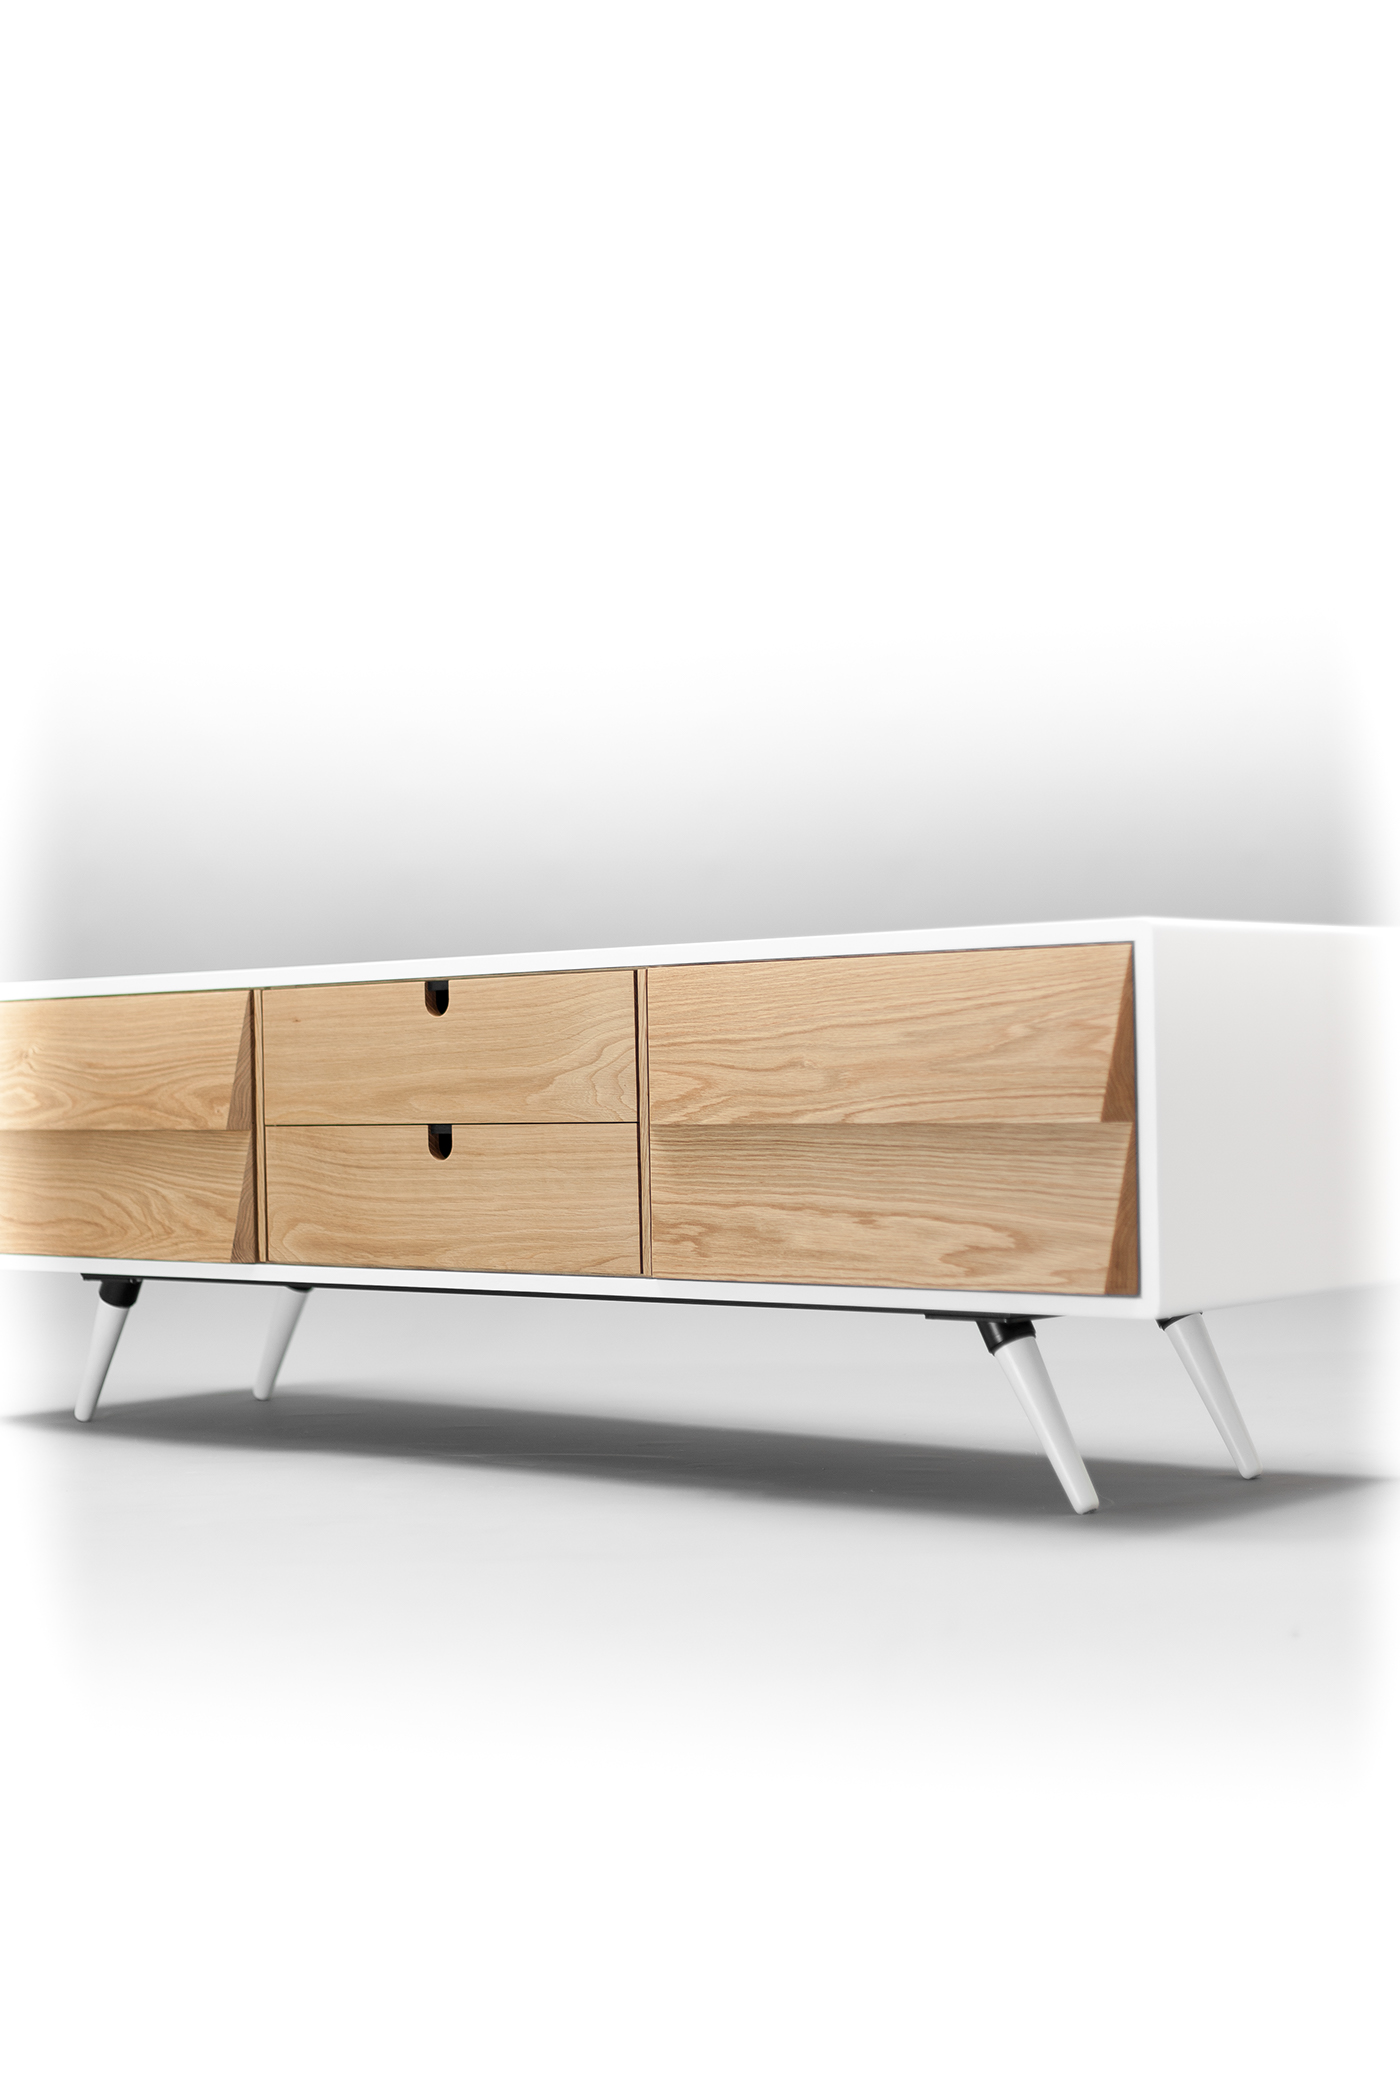 sideboard furniture oak credenza Interior wood habitables